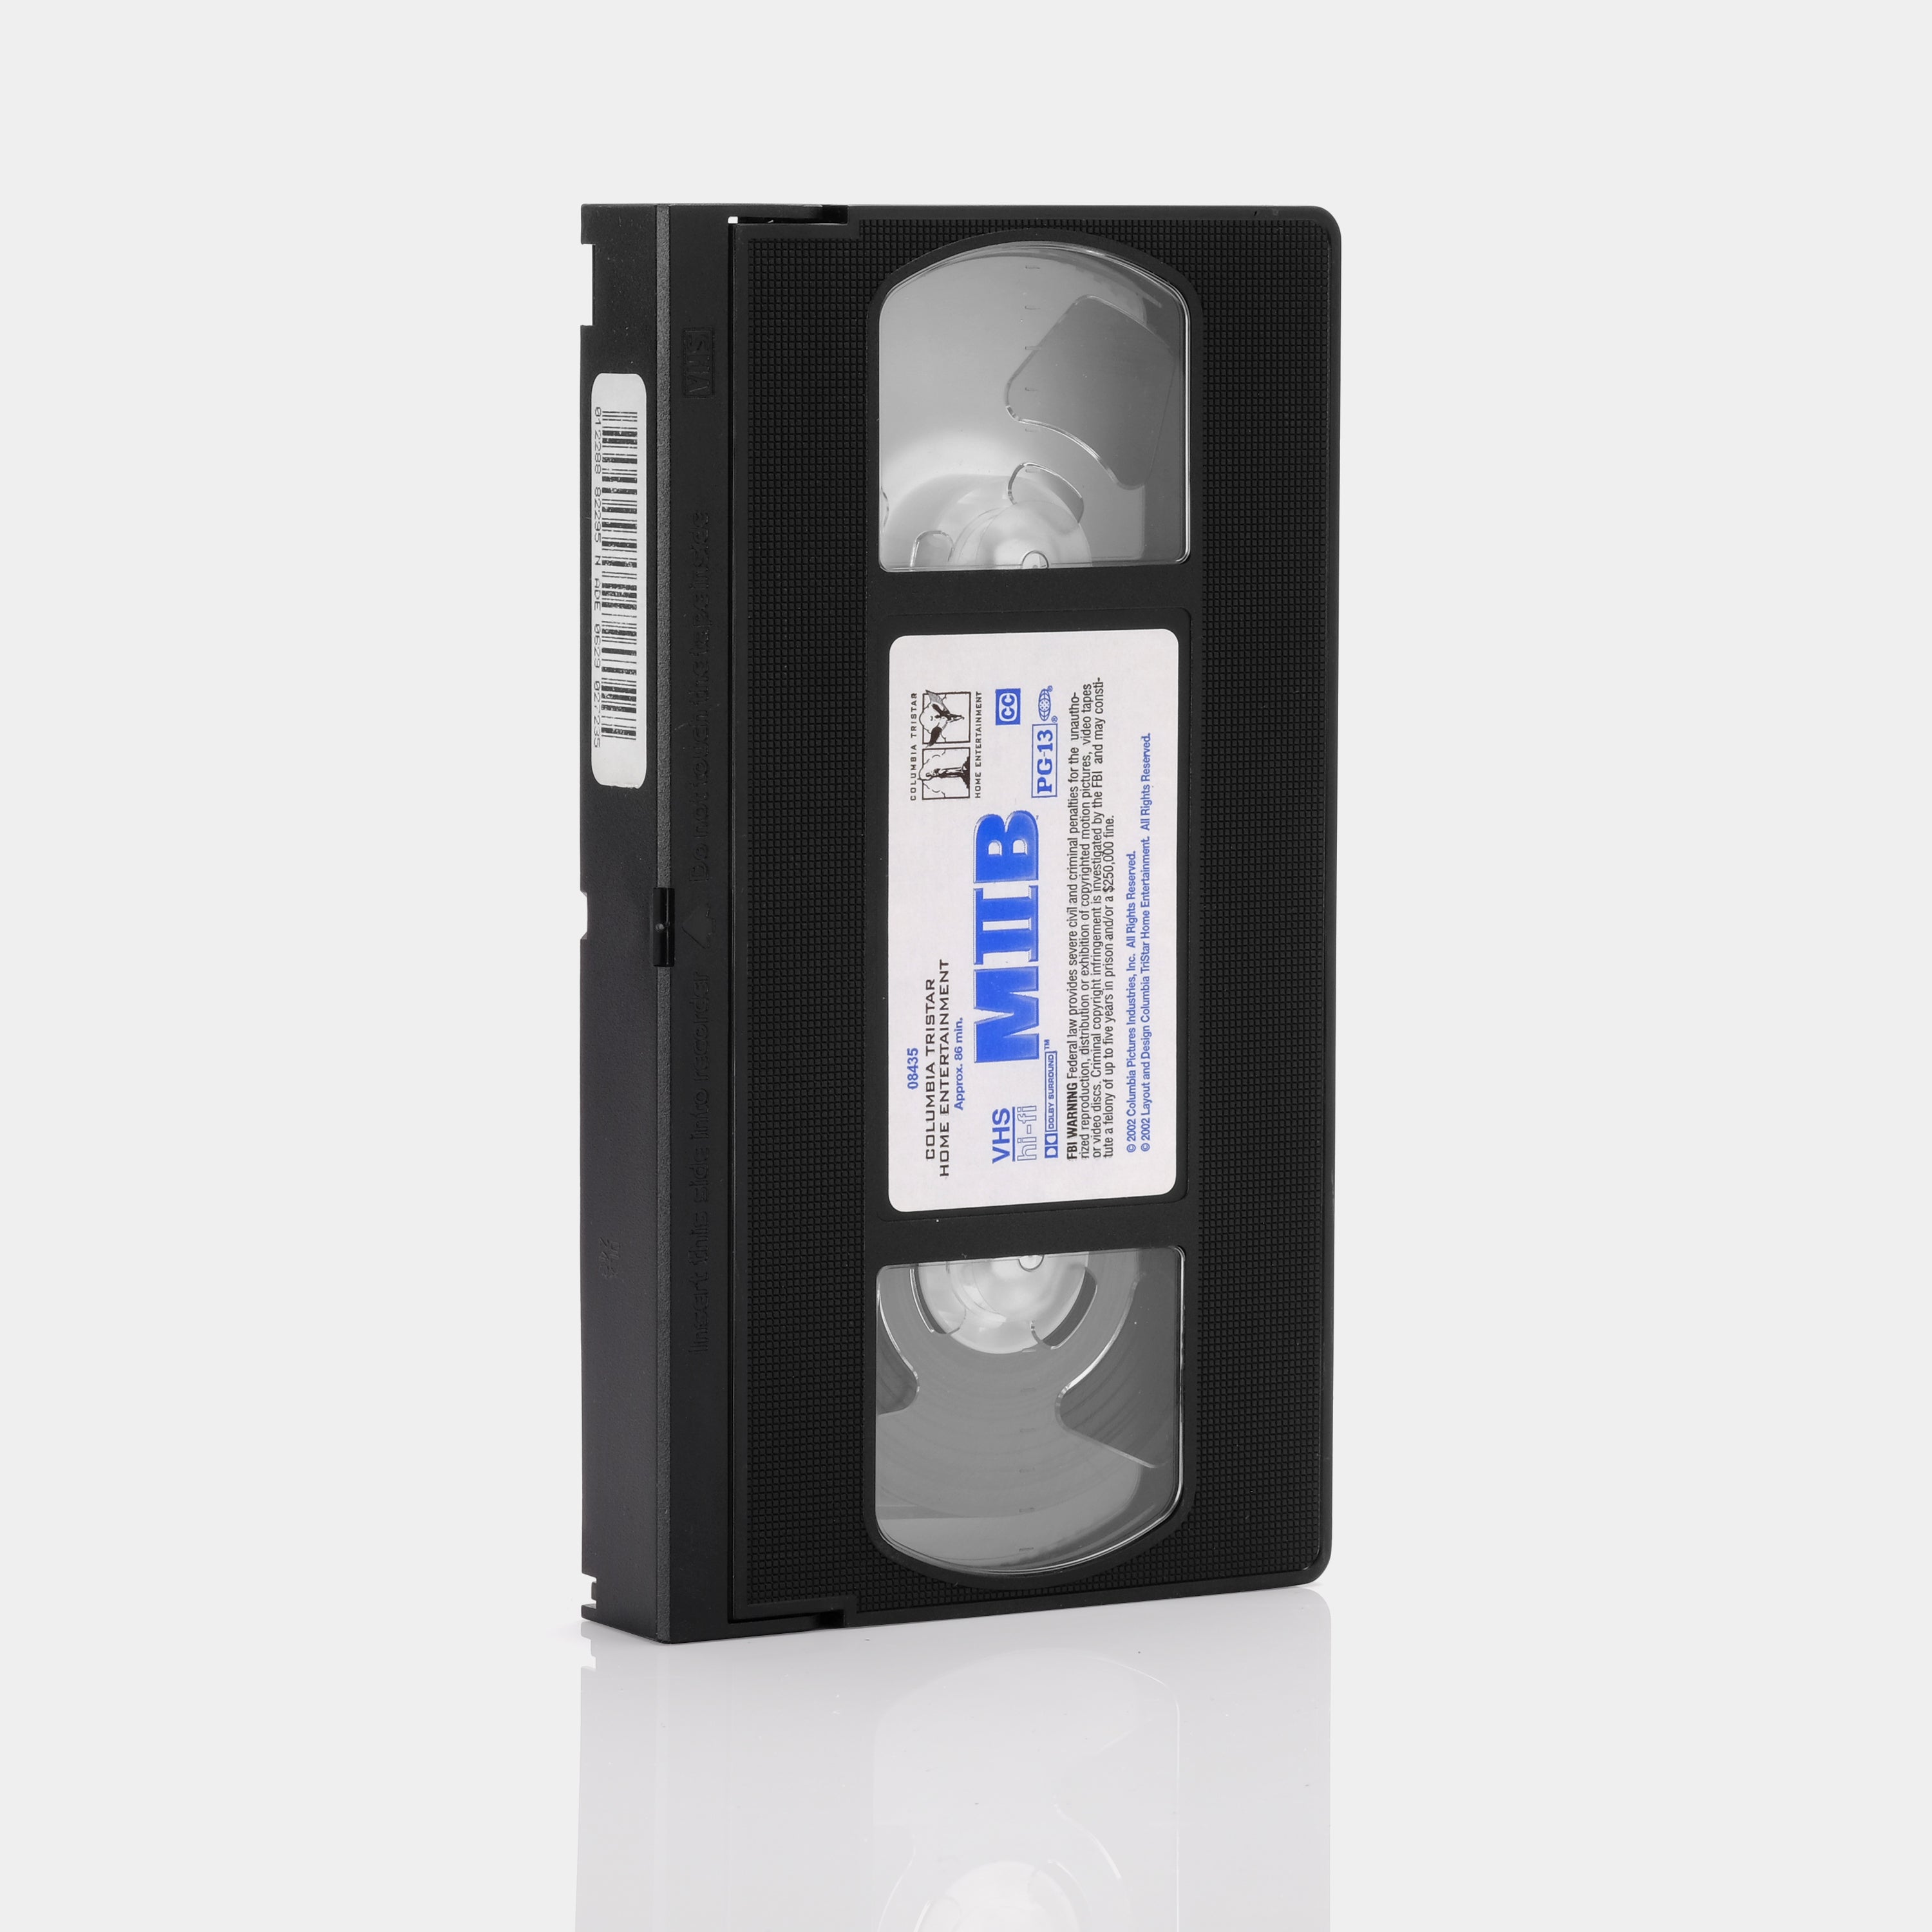 Men In Black II VHS Tape